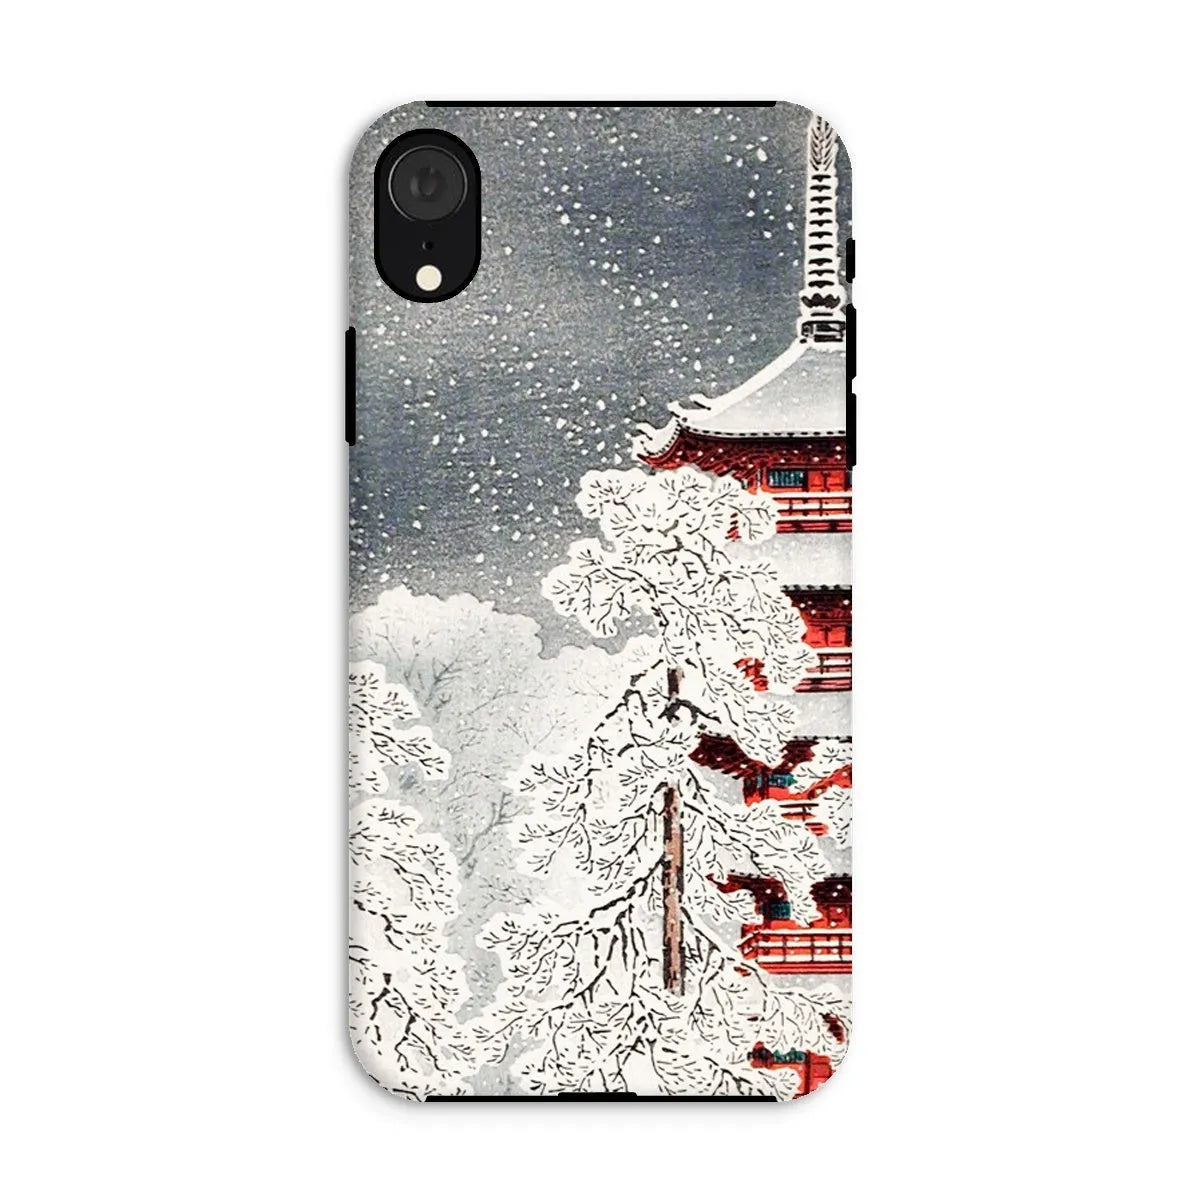 Snow At Asakusa - Shin-hanga Phone Case - Takahashi Shōtei - Iphone Xr / Matte - Mobile Phone Cases - Aesthetic Art